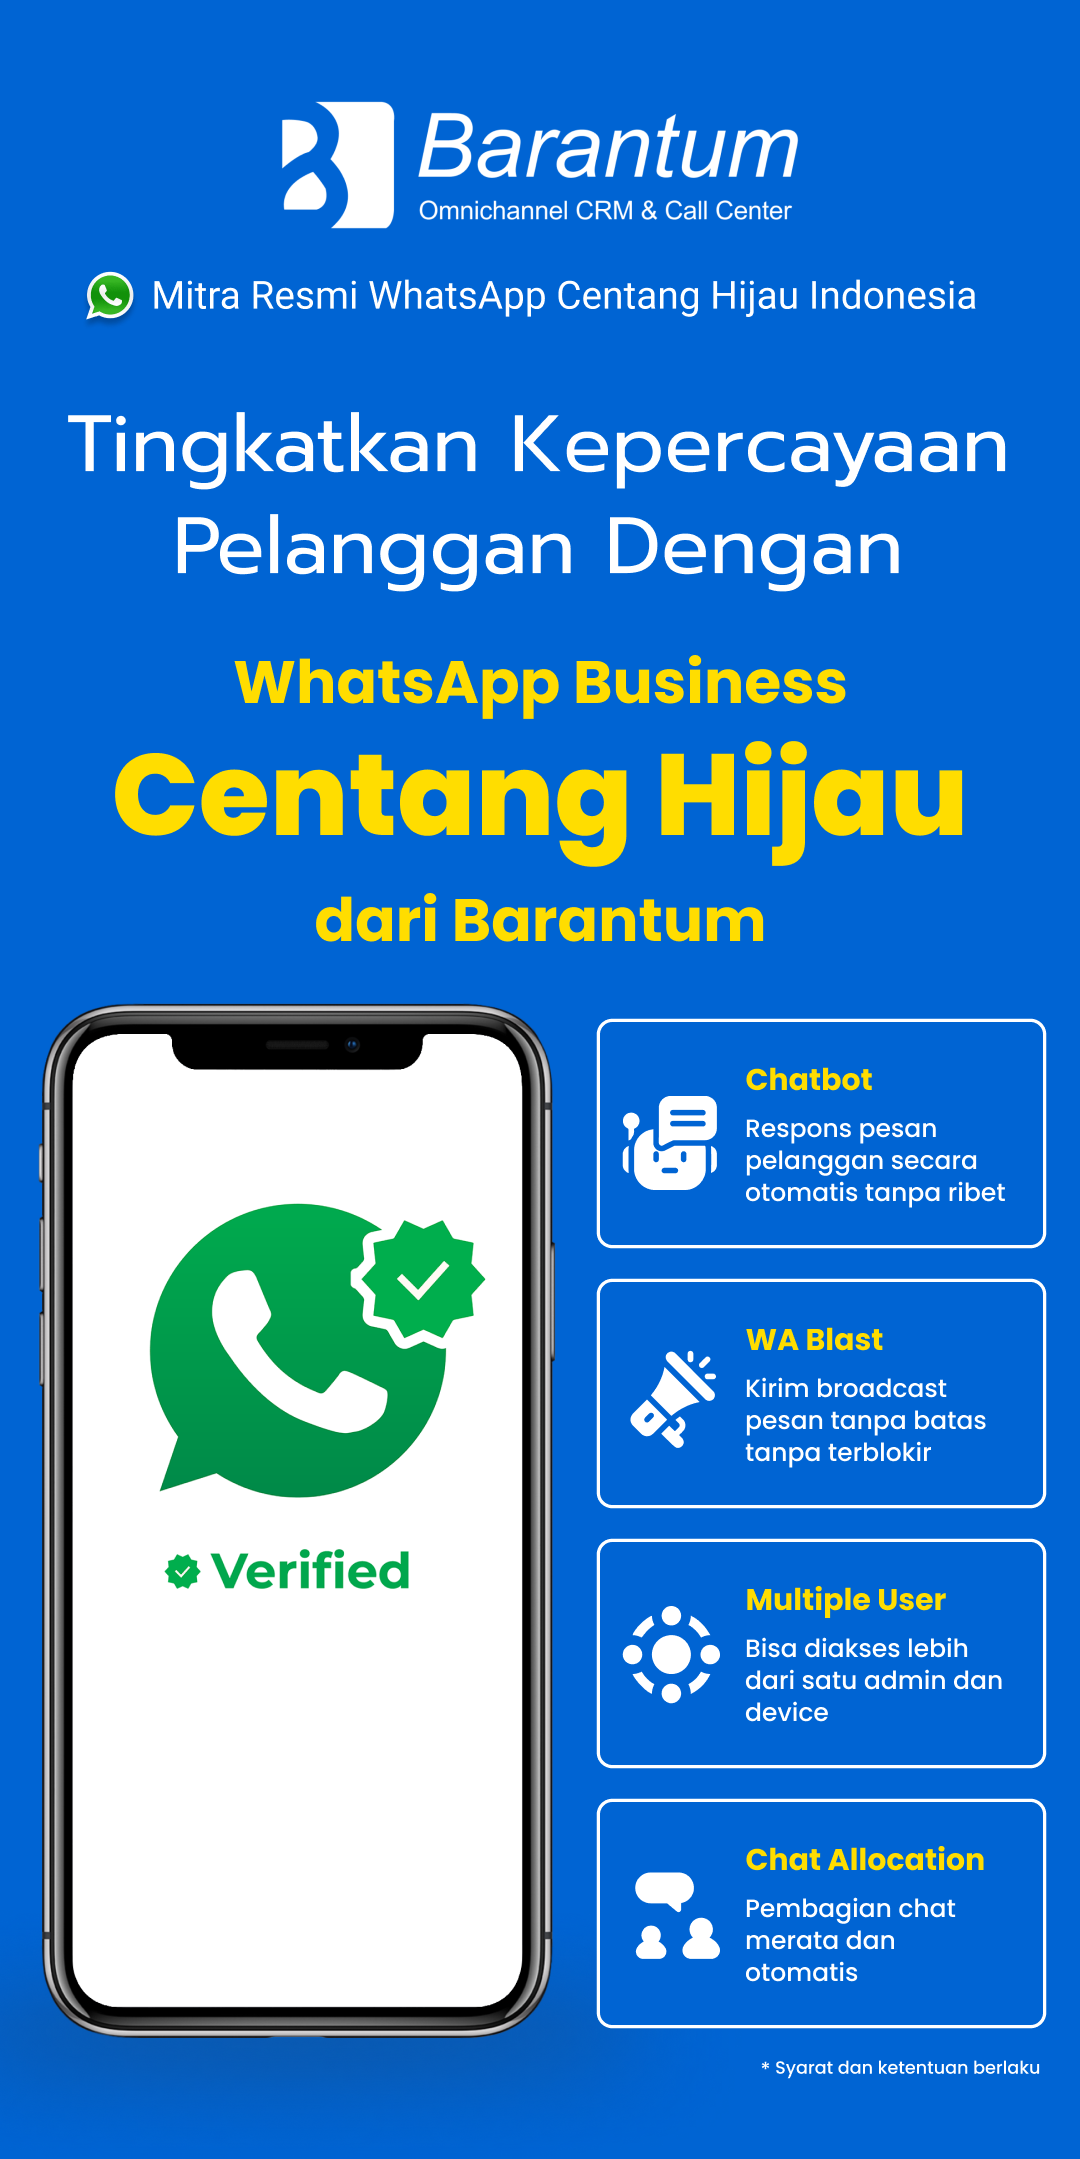 WhatsApp Business Centang Hijau by Barantum